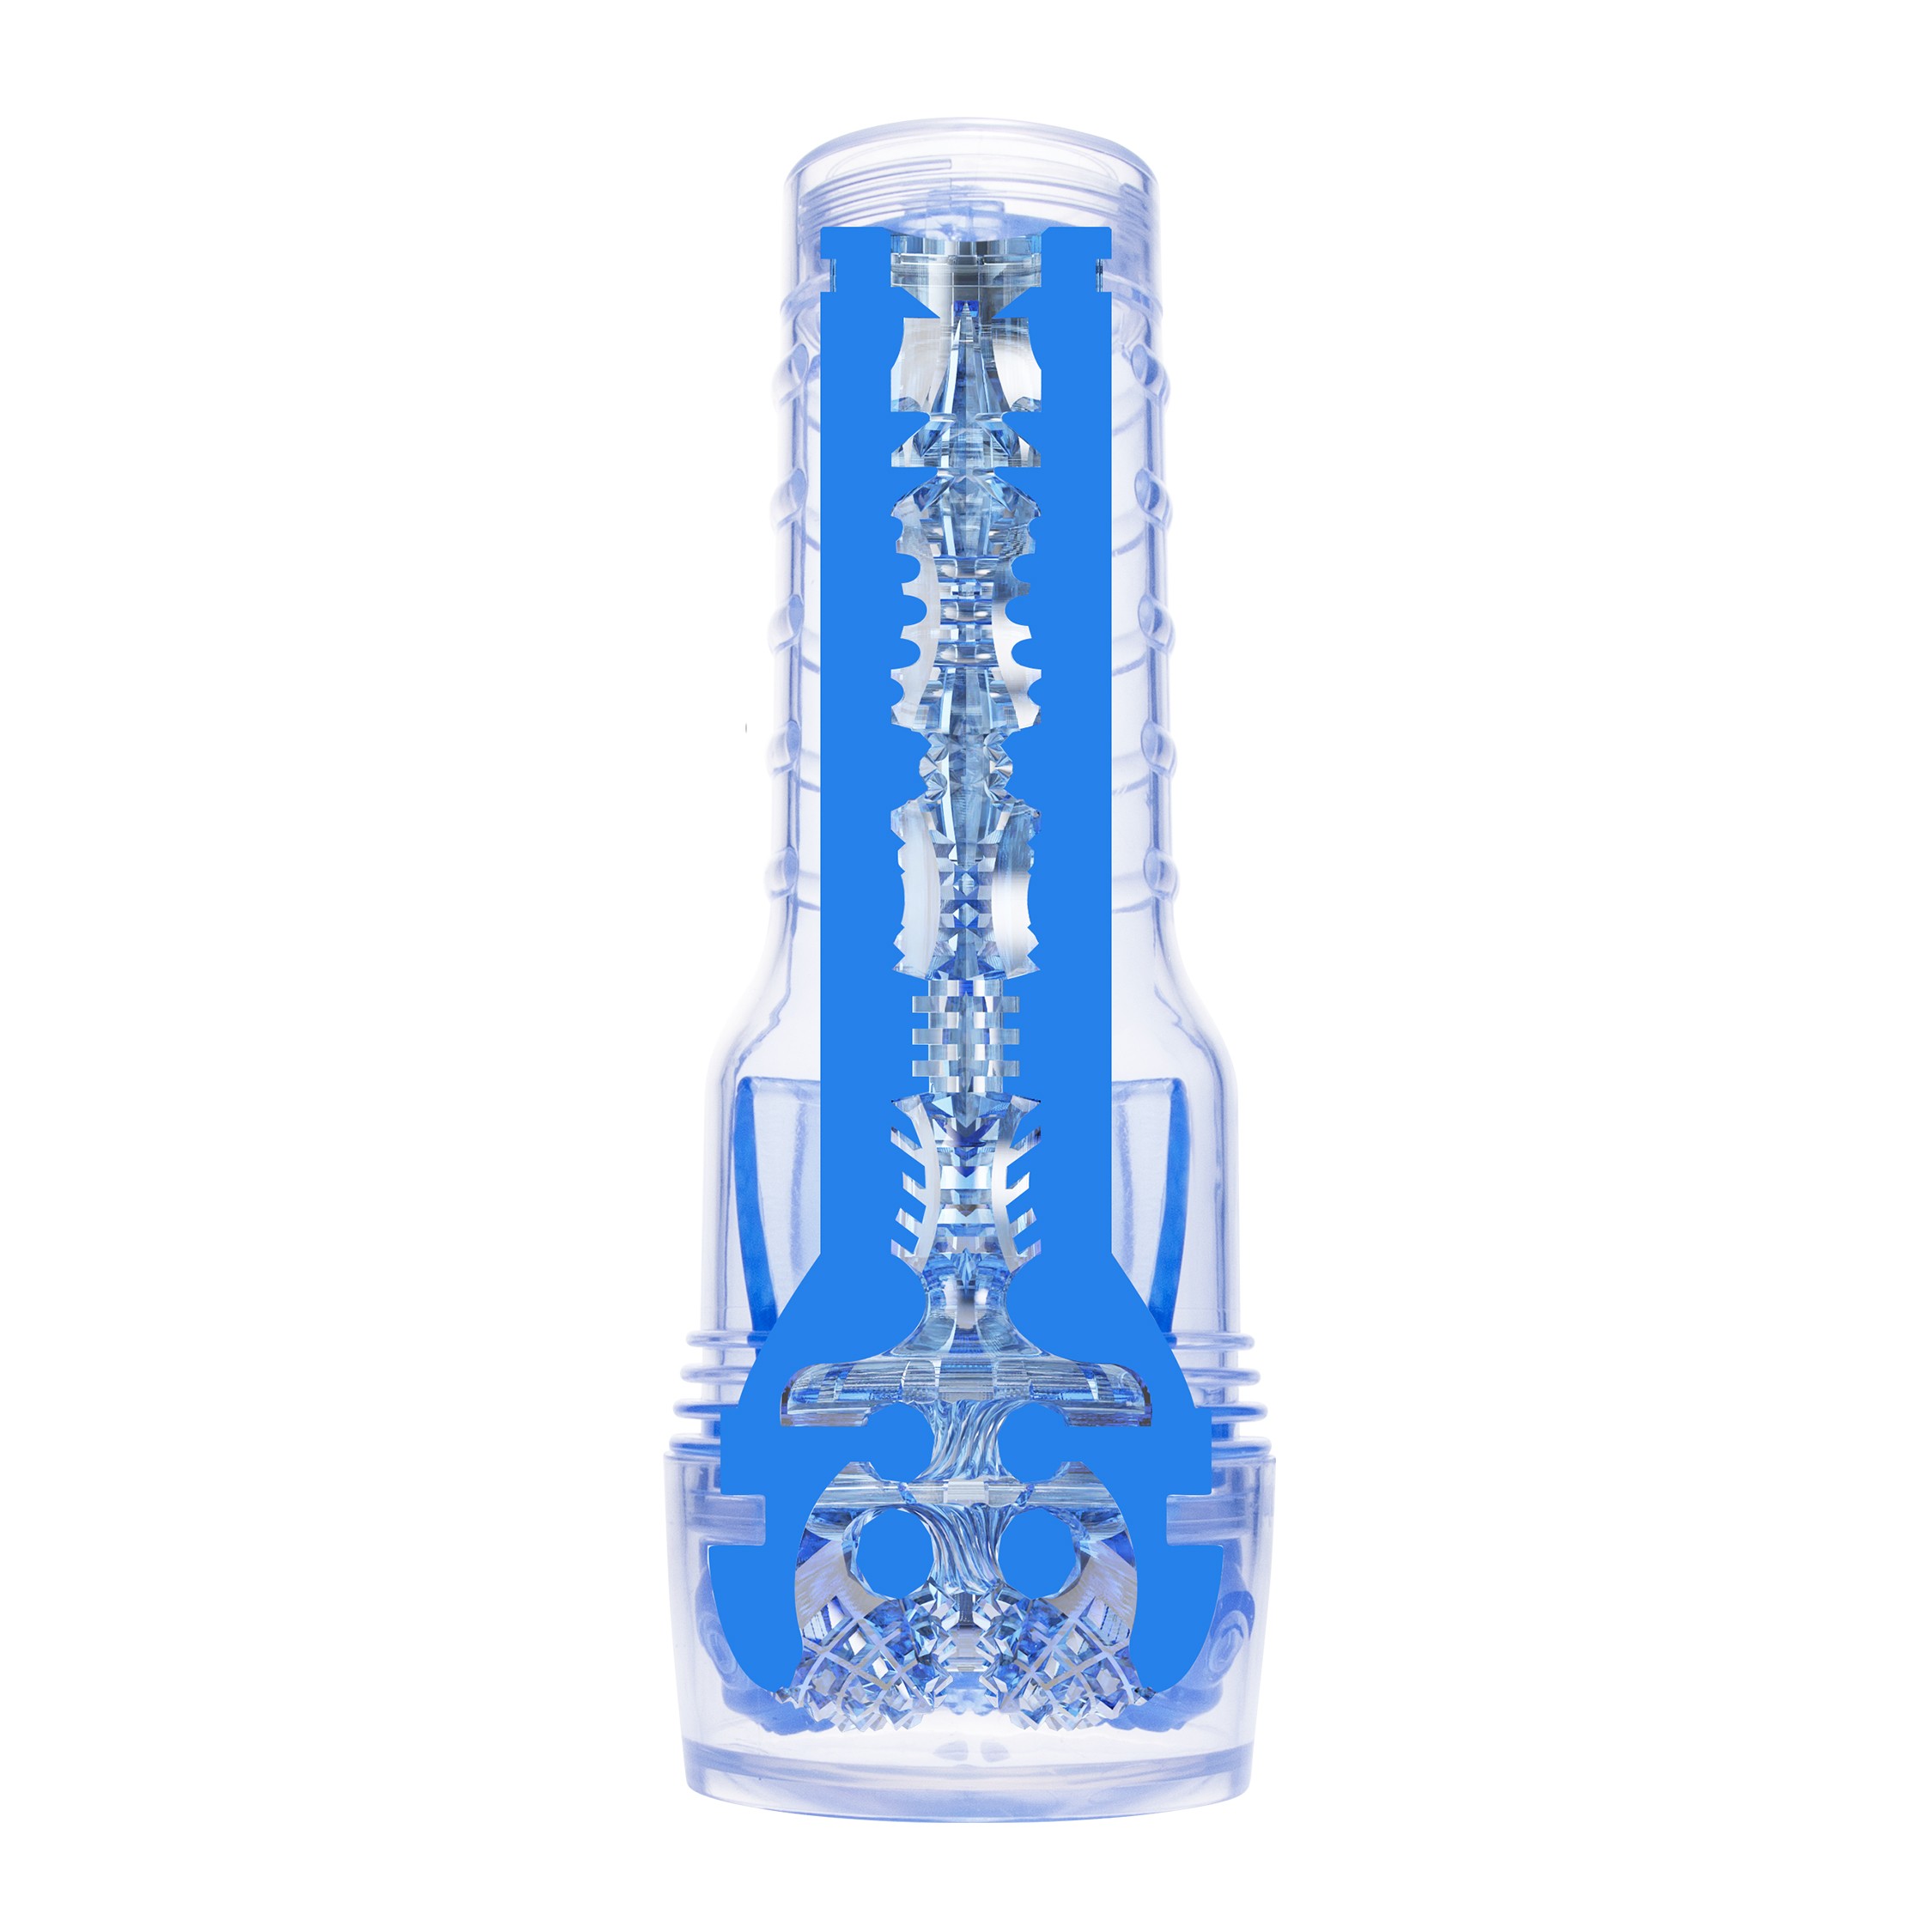 Fleshlight Turbo Core Blue Ice Oral Mastürbatör